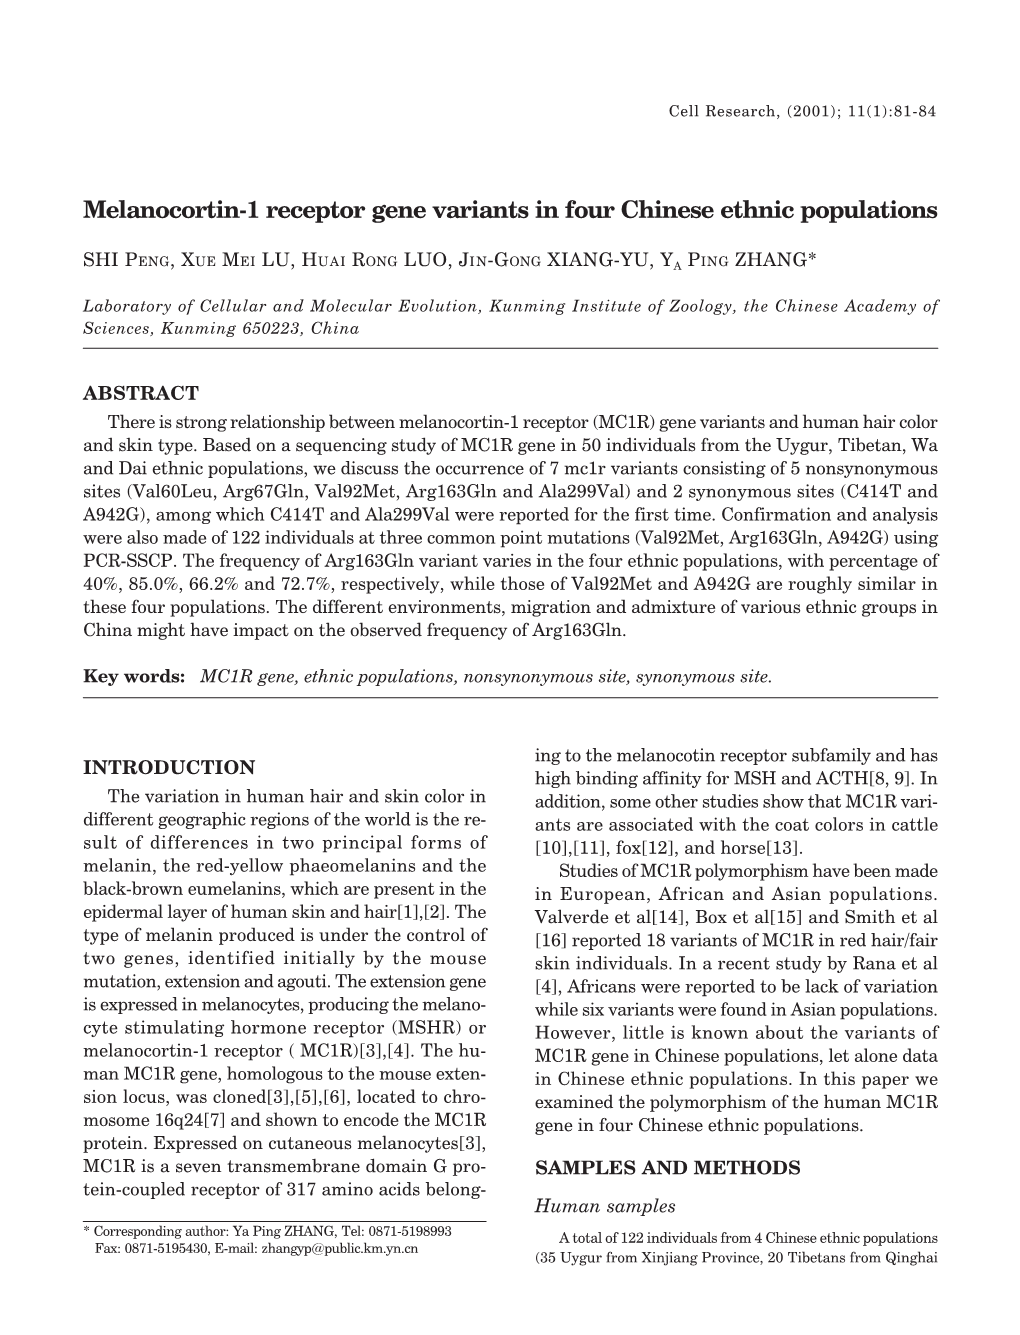 Melanocortin-1 Receptor Gene Variants in Four Chinese Ethnic Populations